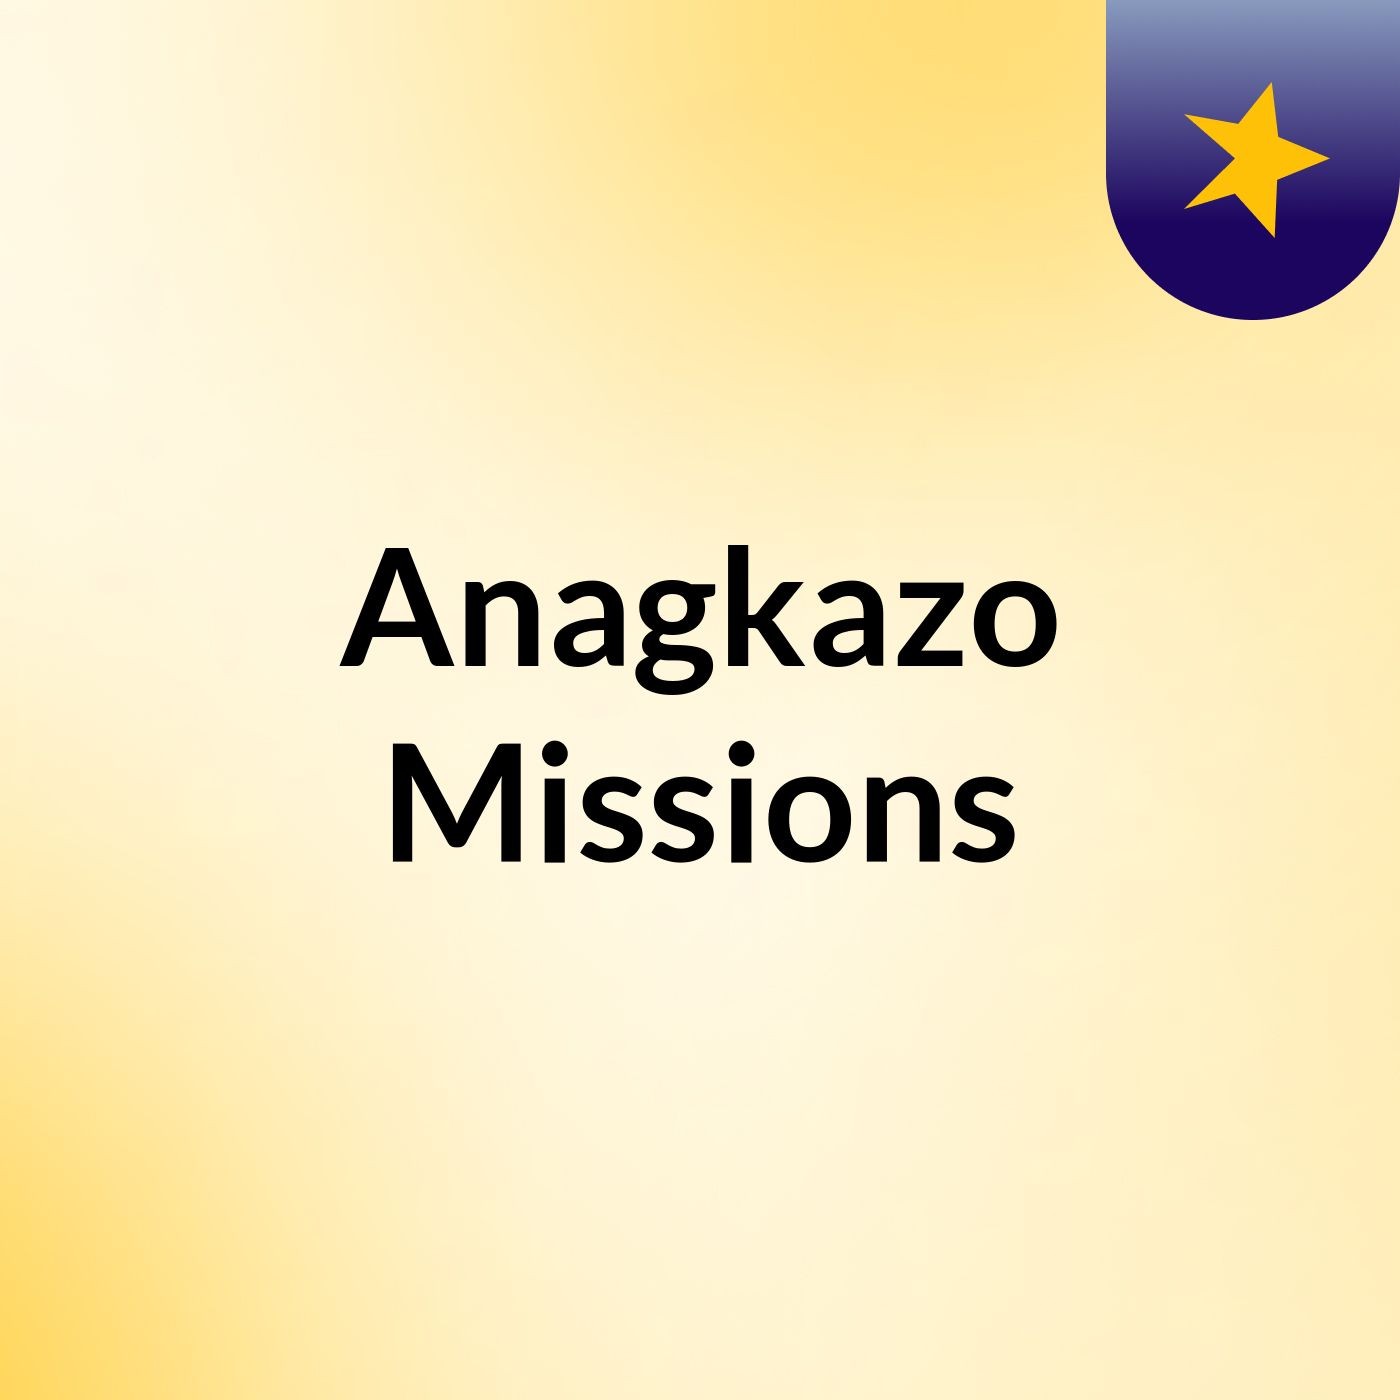 Anagkazo Missions